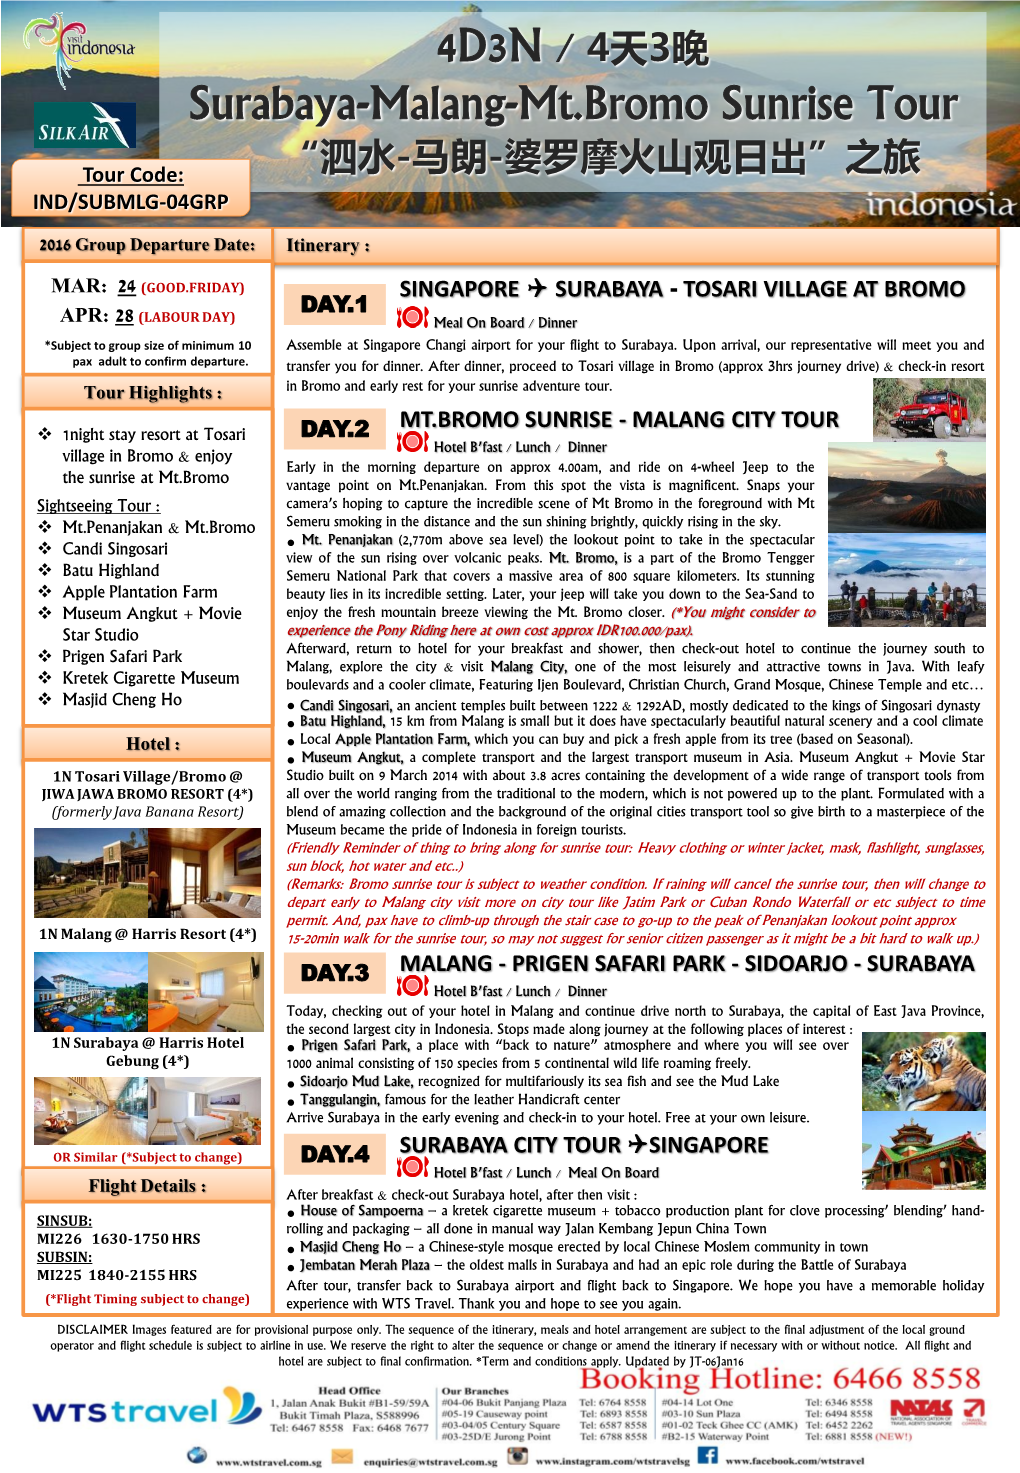 Surabaya-Malang-Mt.Bromo Sunrise Tour